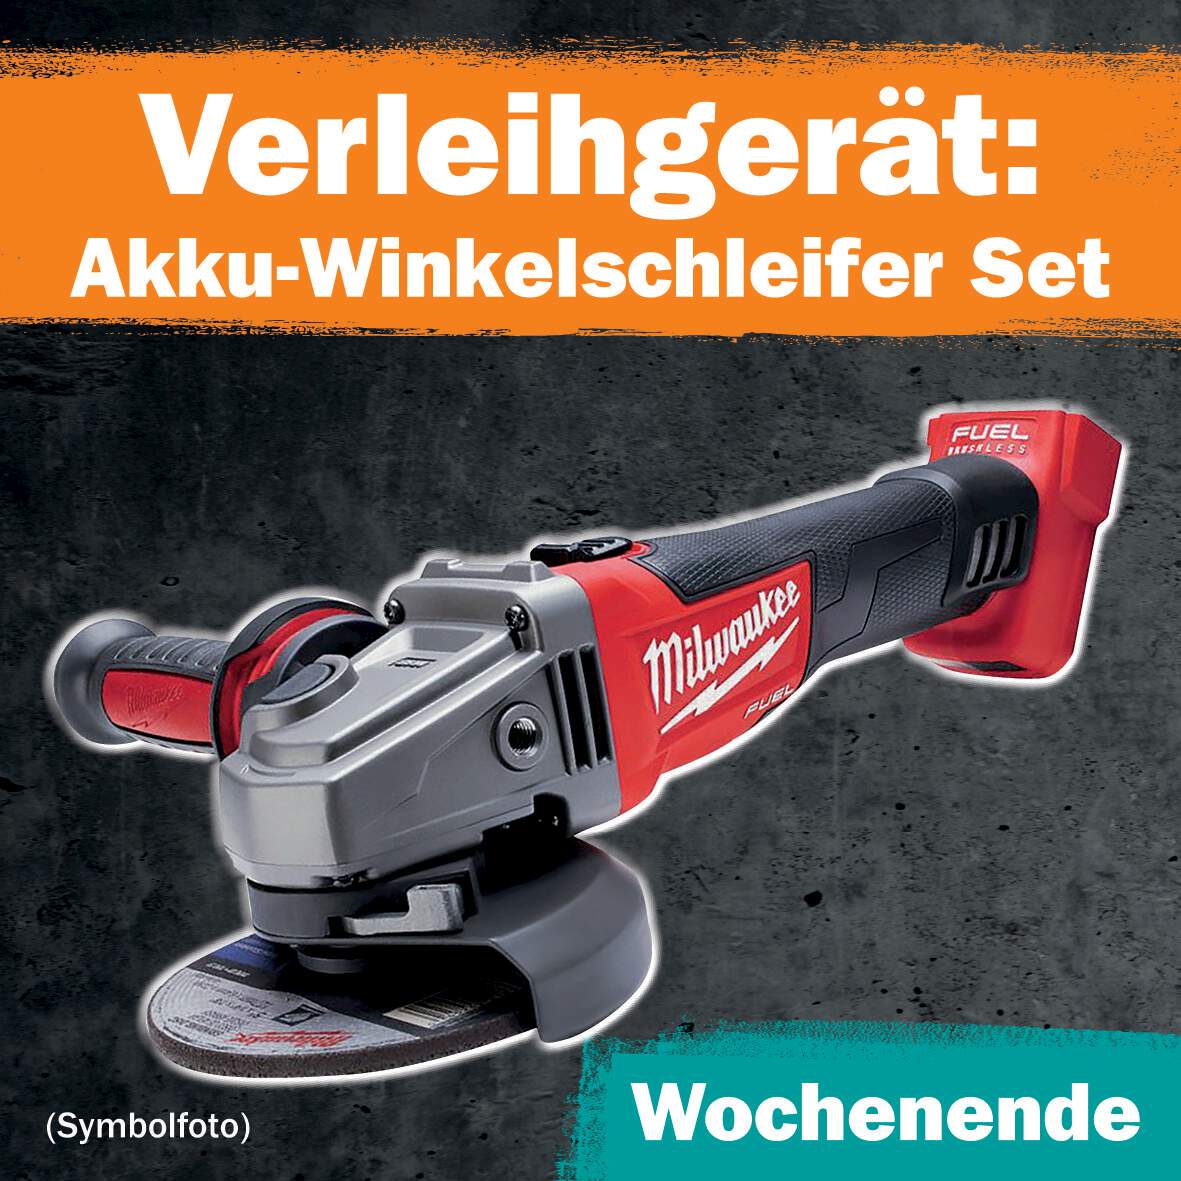 1288713 - Akku-Winkelschleifer Set 1 WE Leihdauer